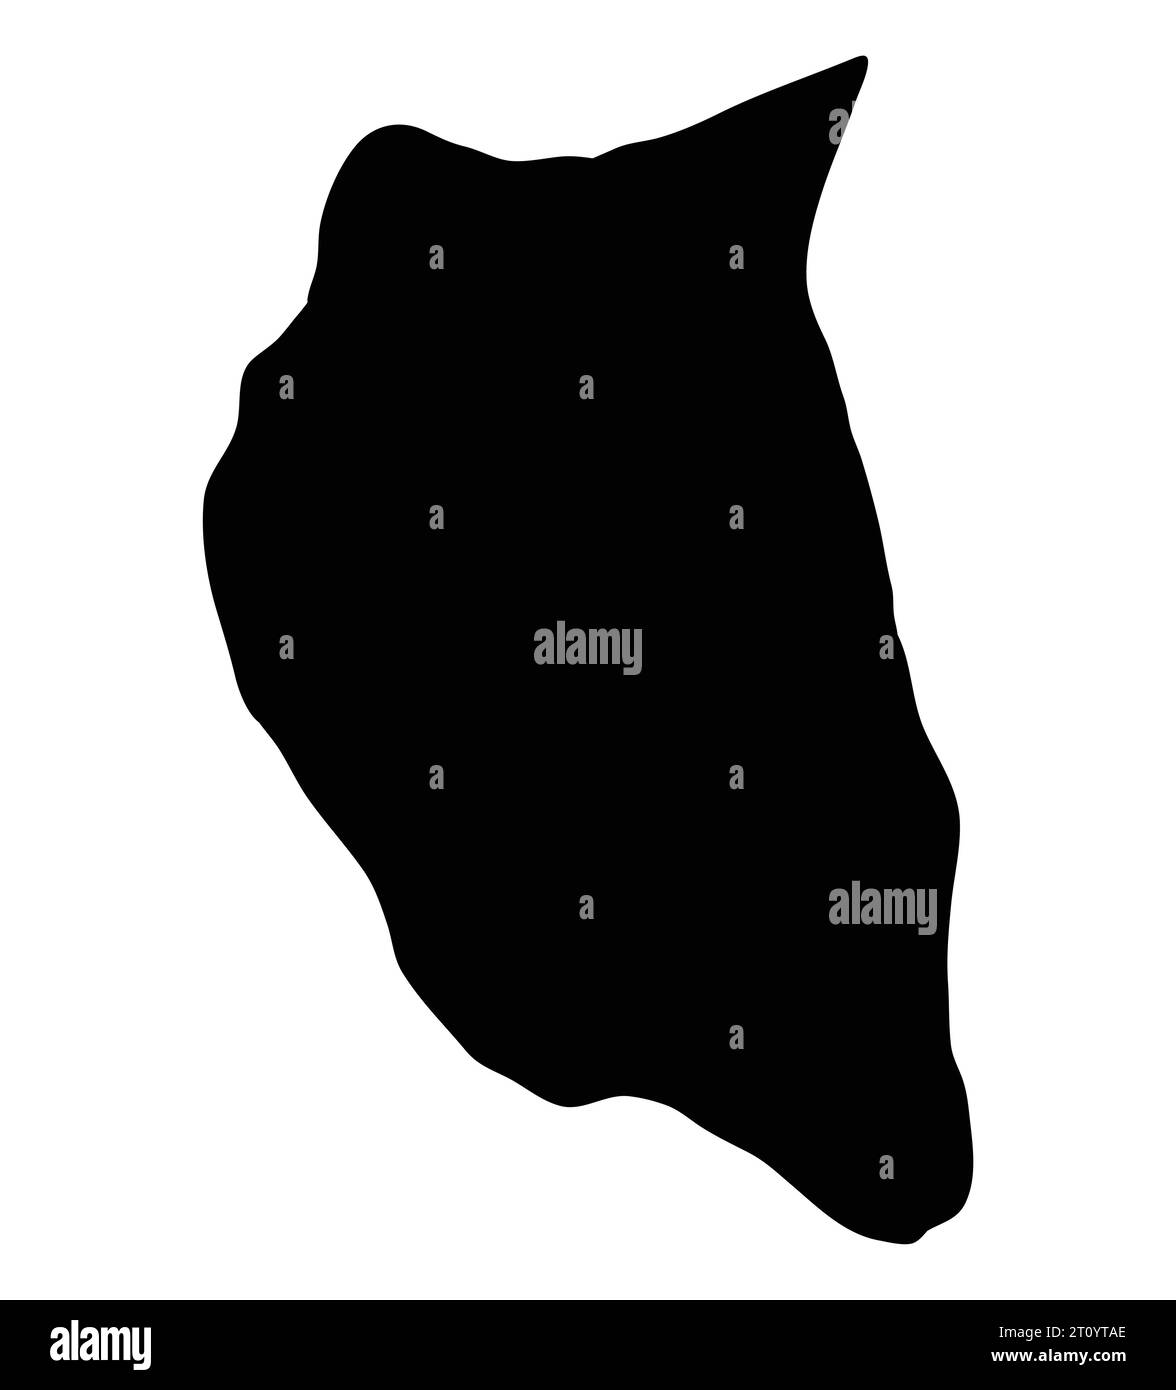 Henderson island pitcairn map silhouette region territory, black shape style illustration Stock Vector